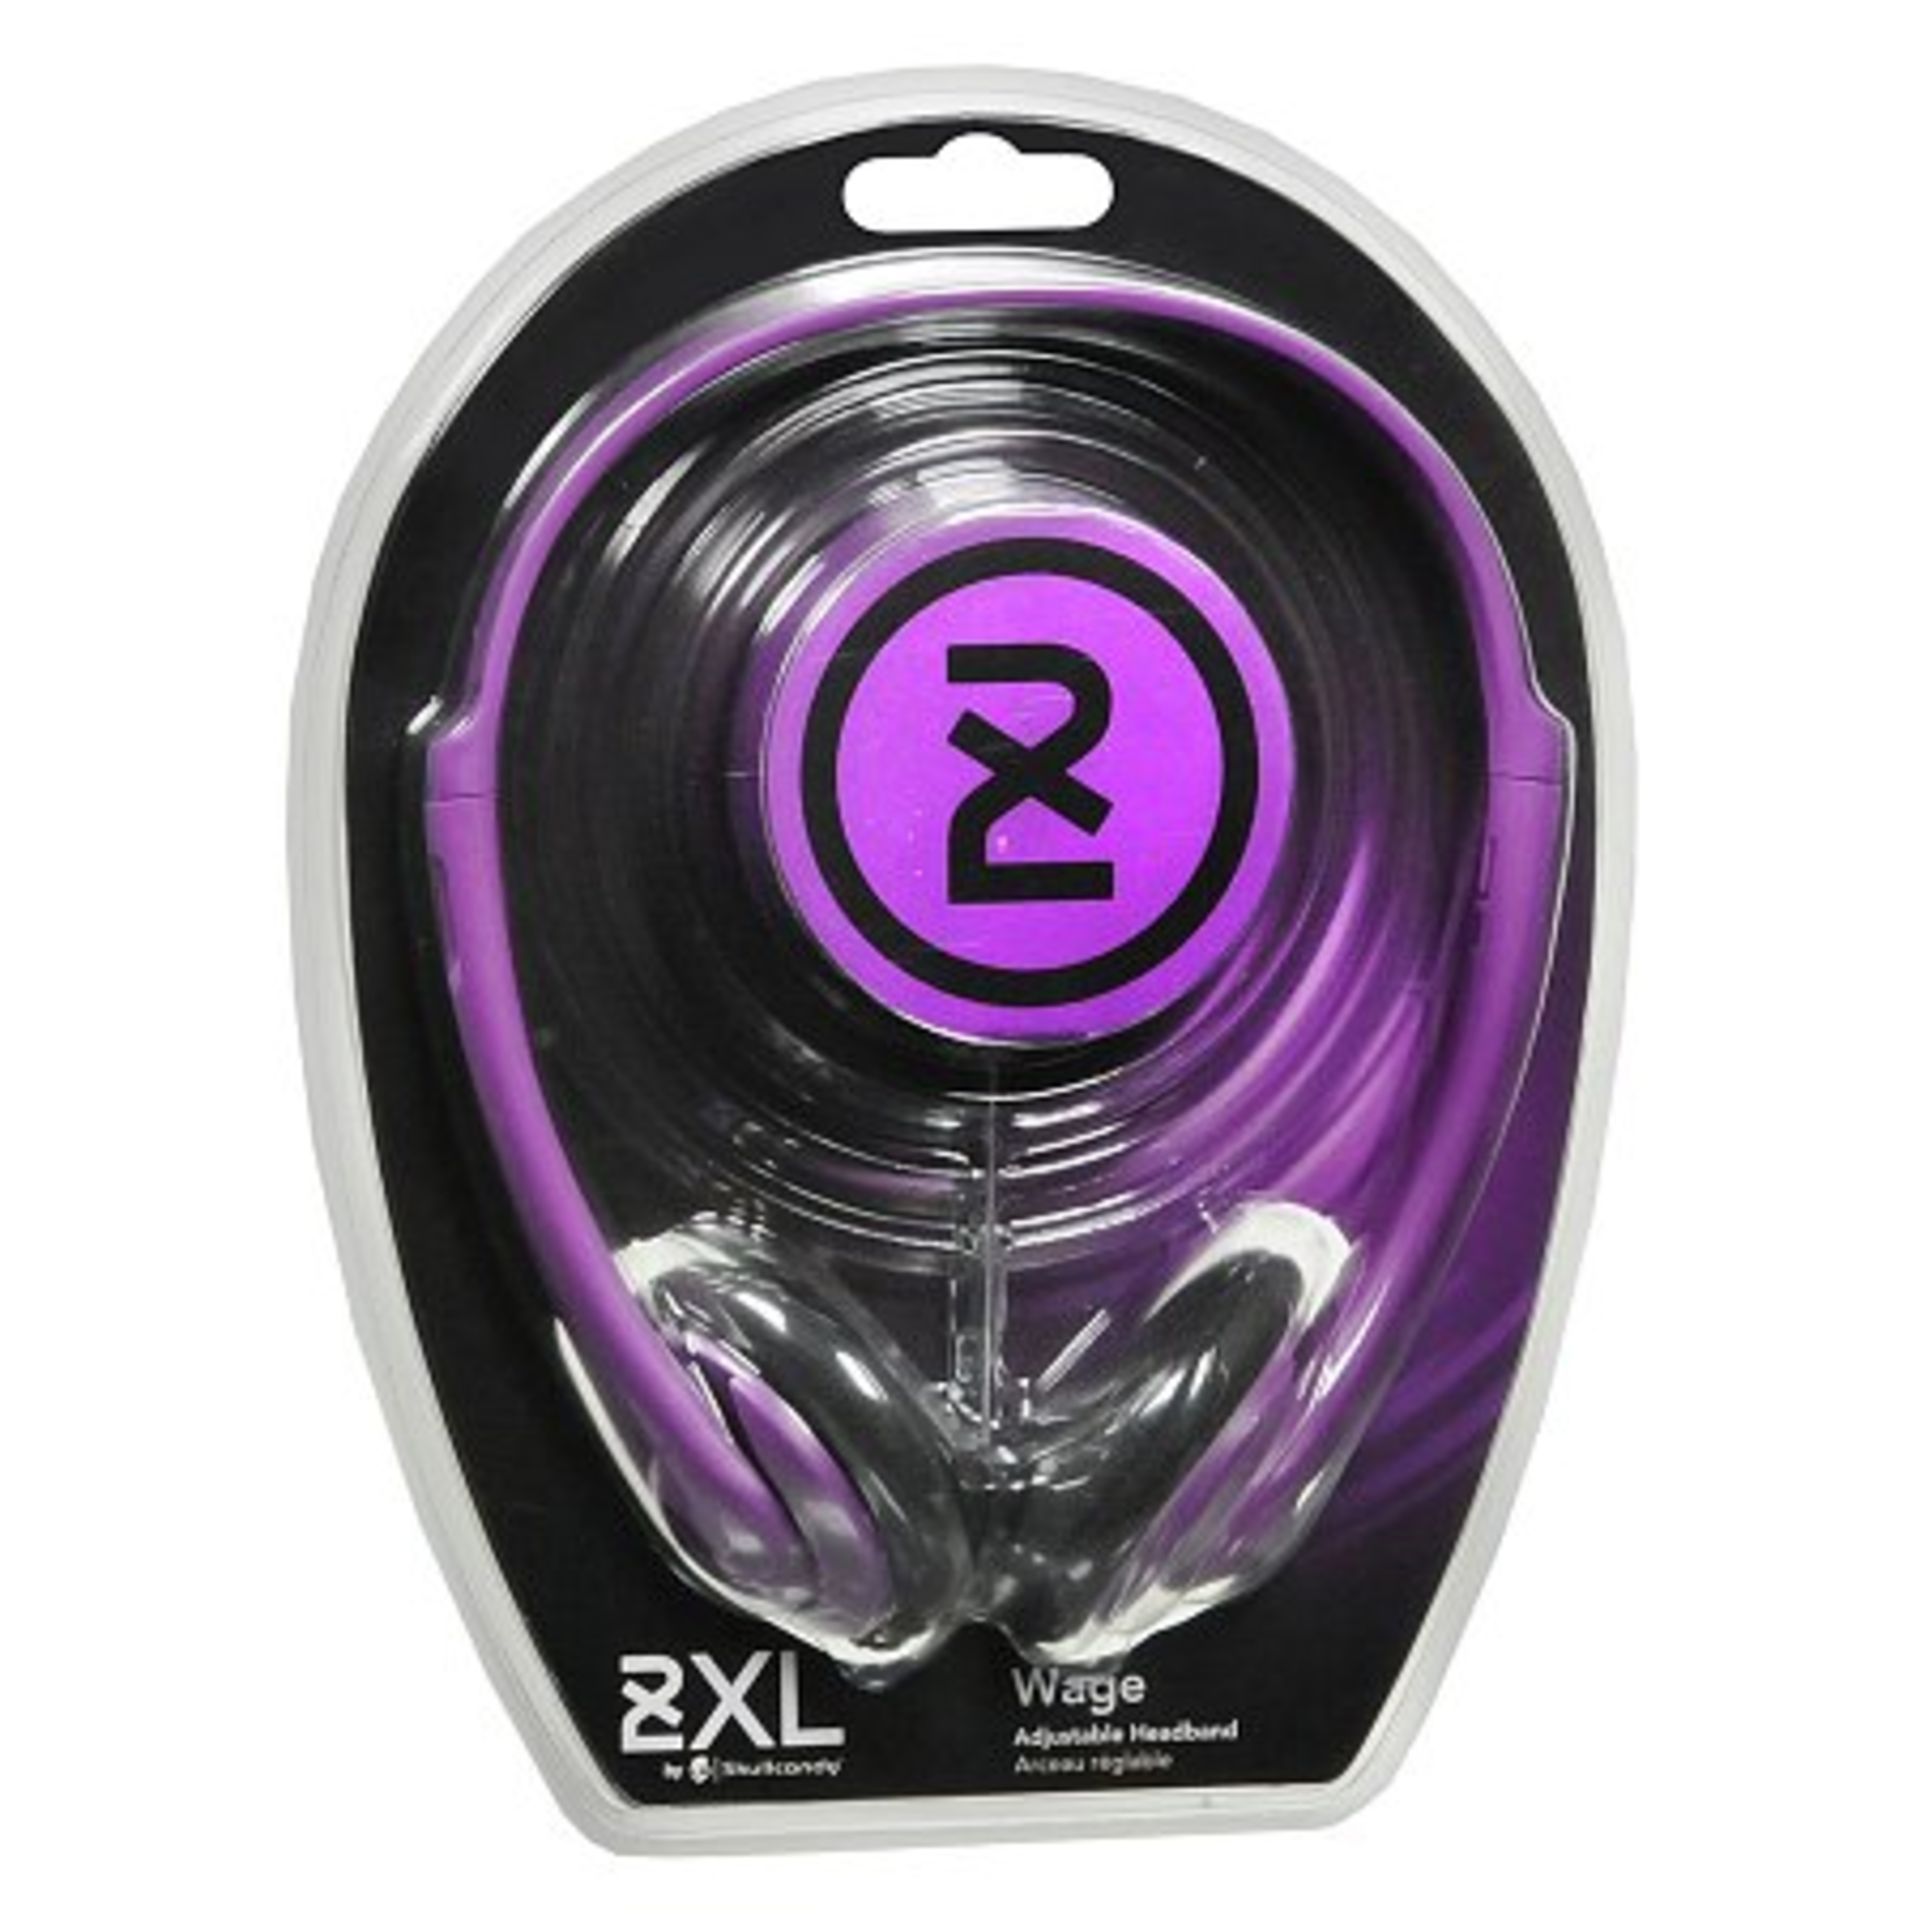 V *TRADE QTY* Brand New Skullcandy 2XL Wage Purple Headphones With Adjustable Headband X 6 YOUR